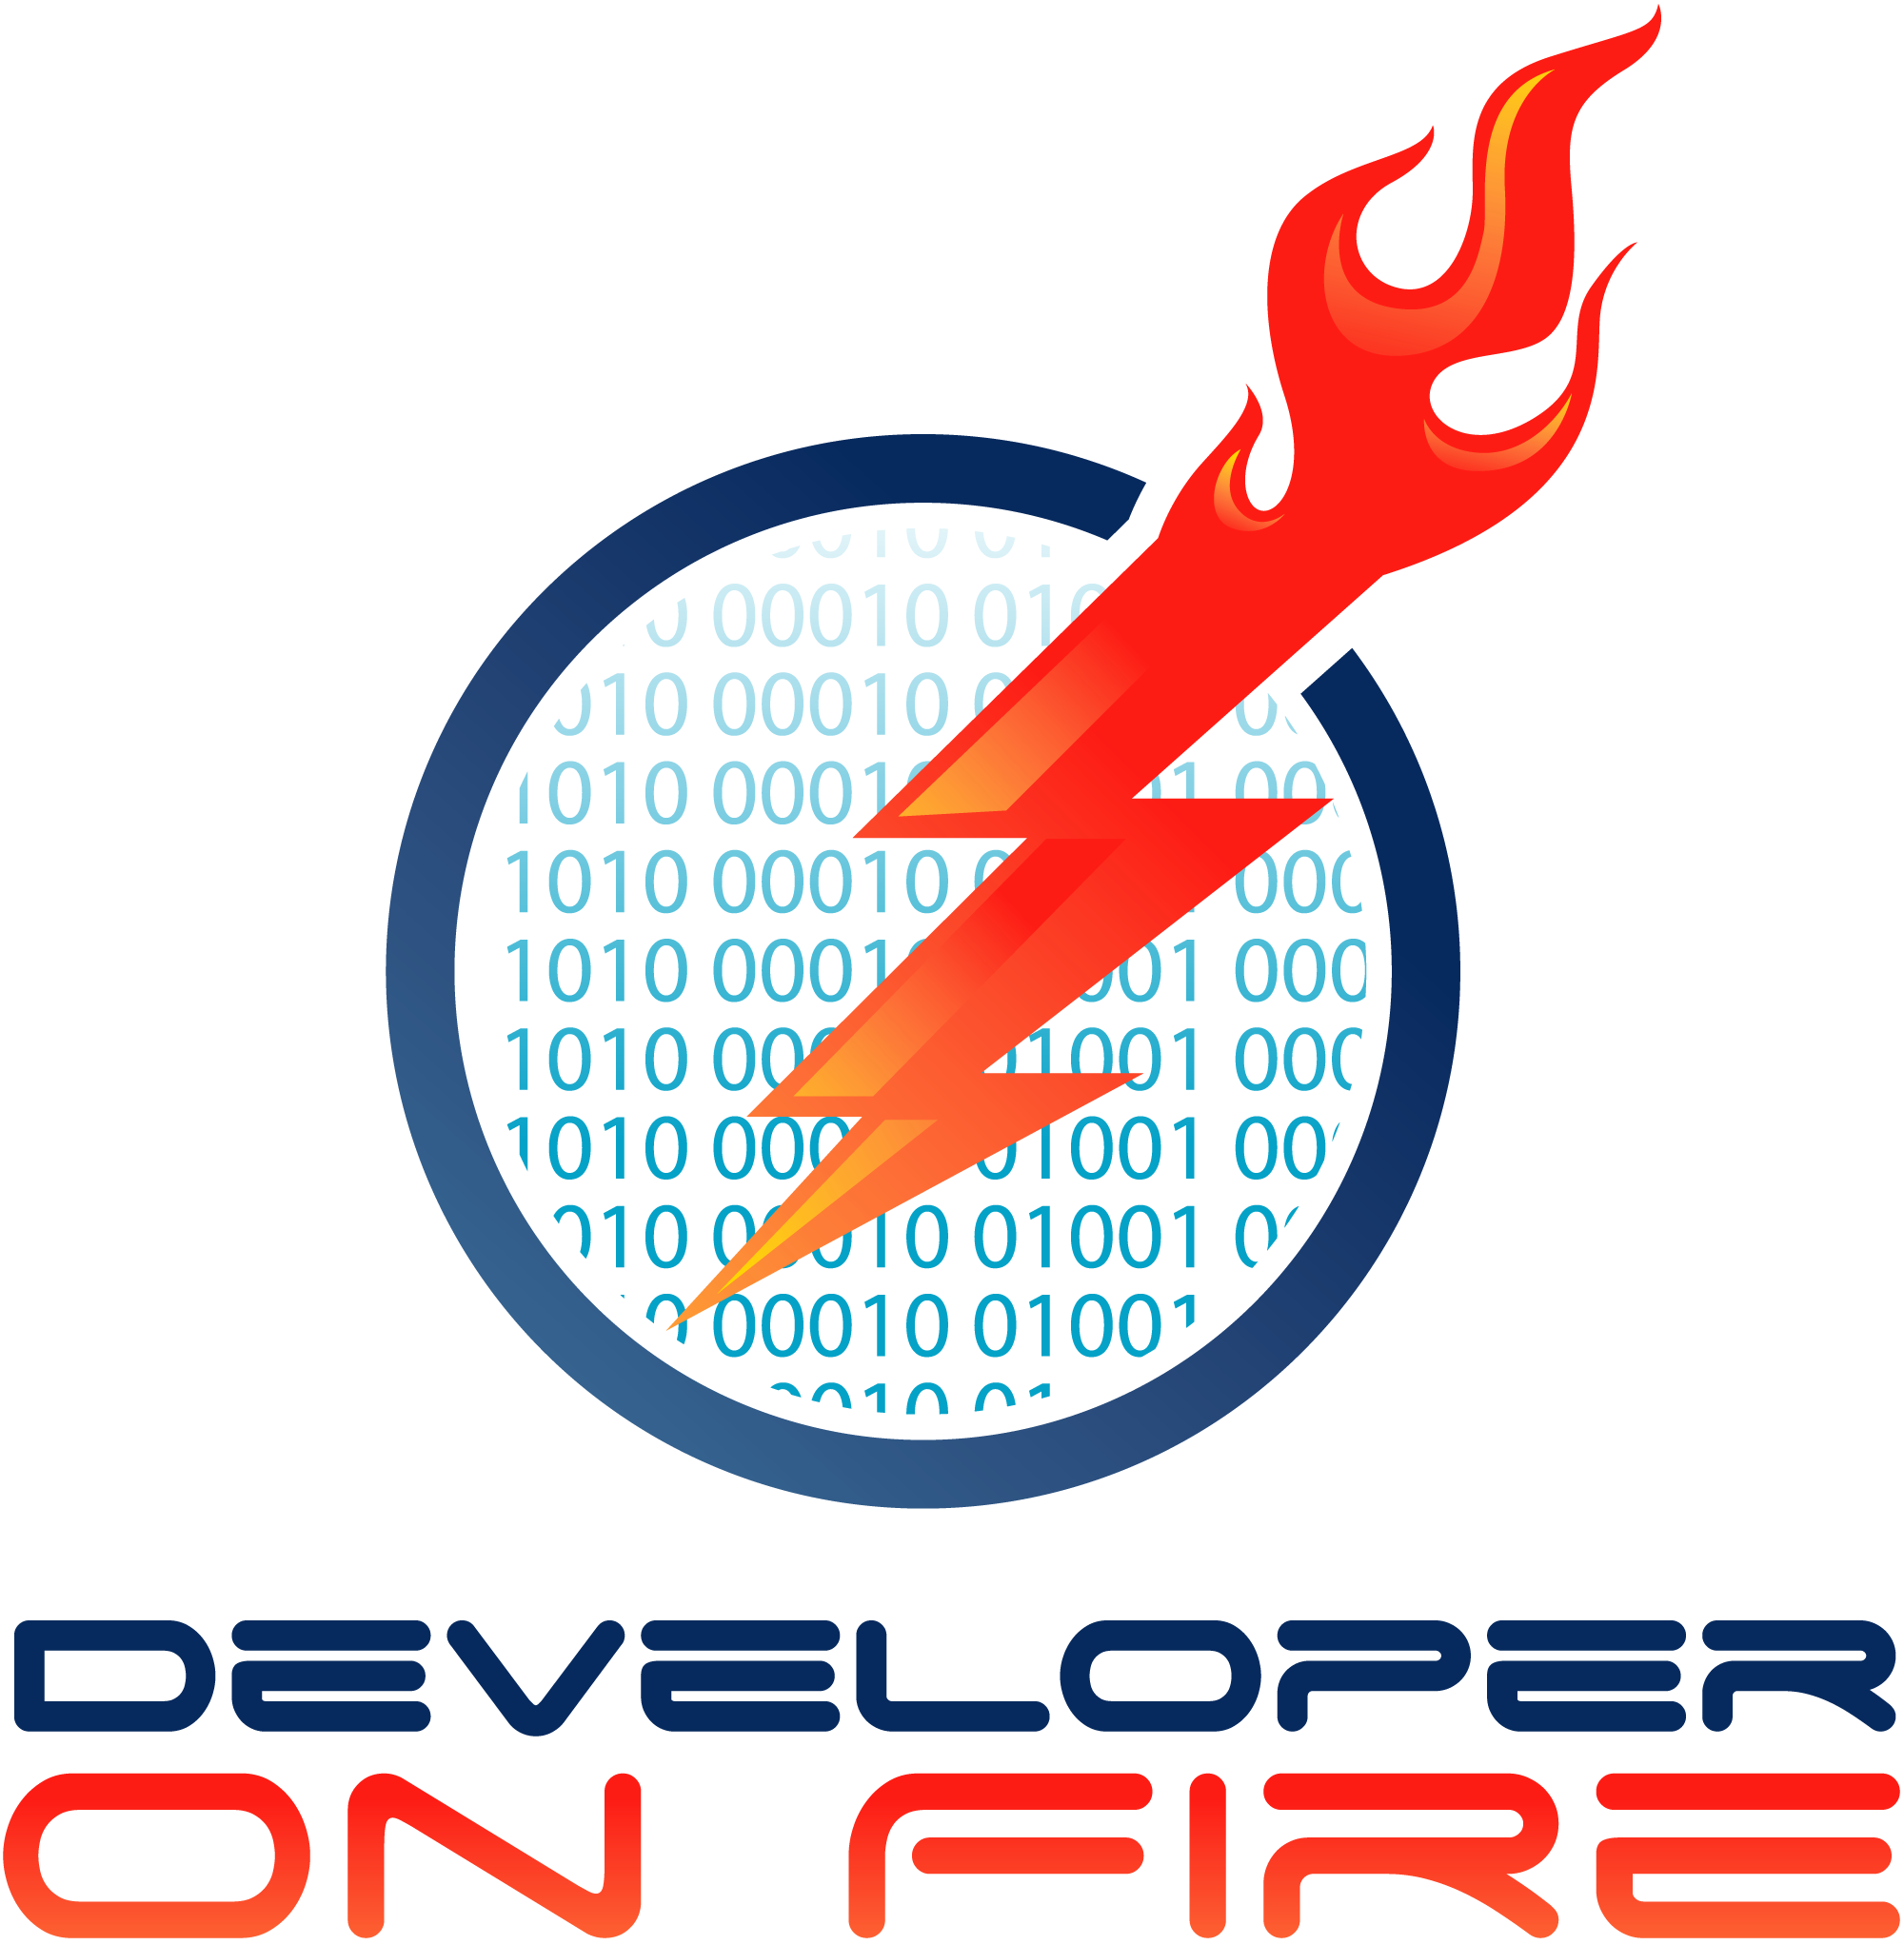 Developer On Fire